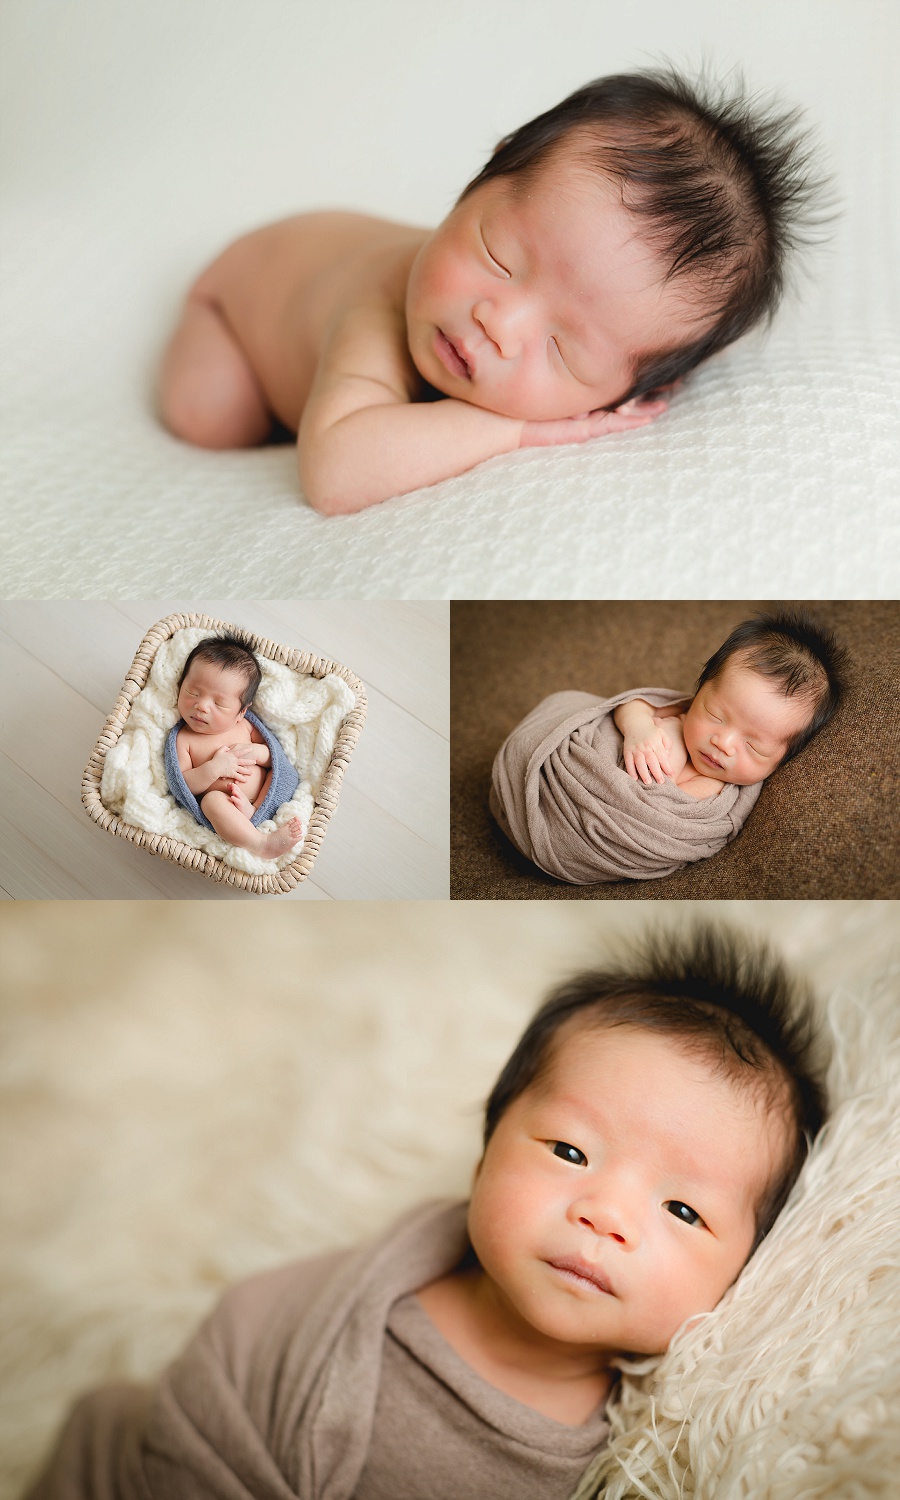 newborn and family session | Tonya Teran Photography - Rockville, MD newborn baby and family photographer